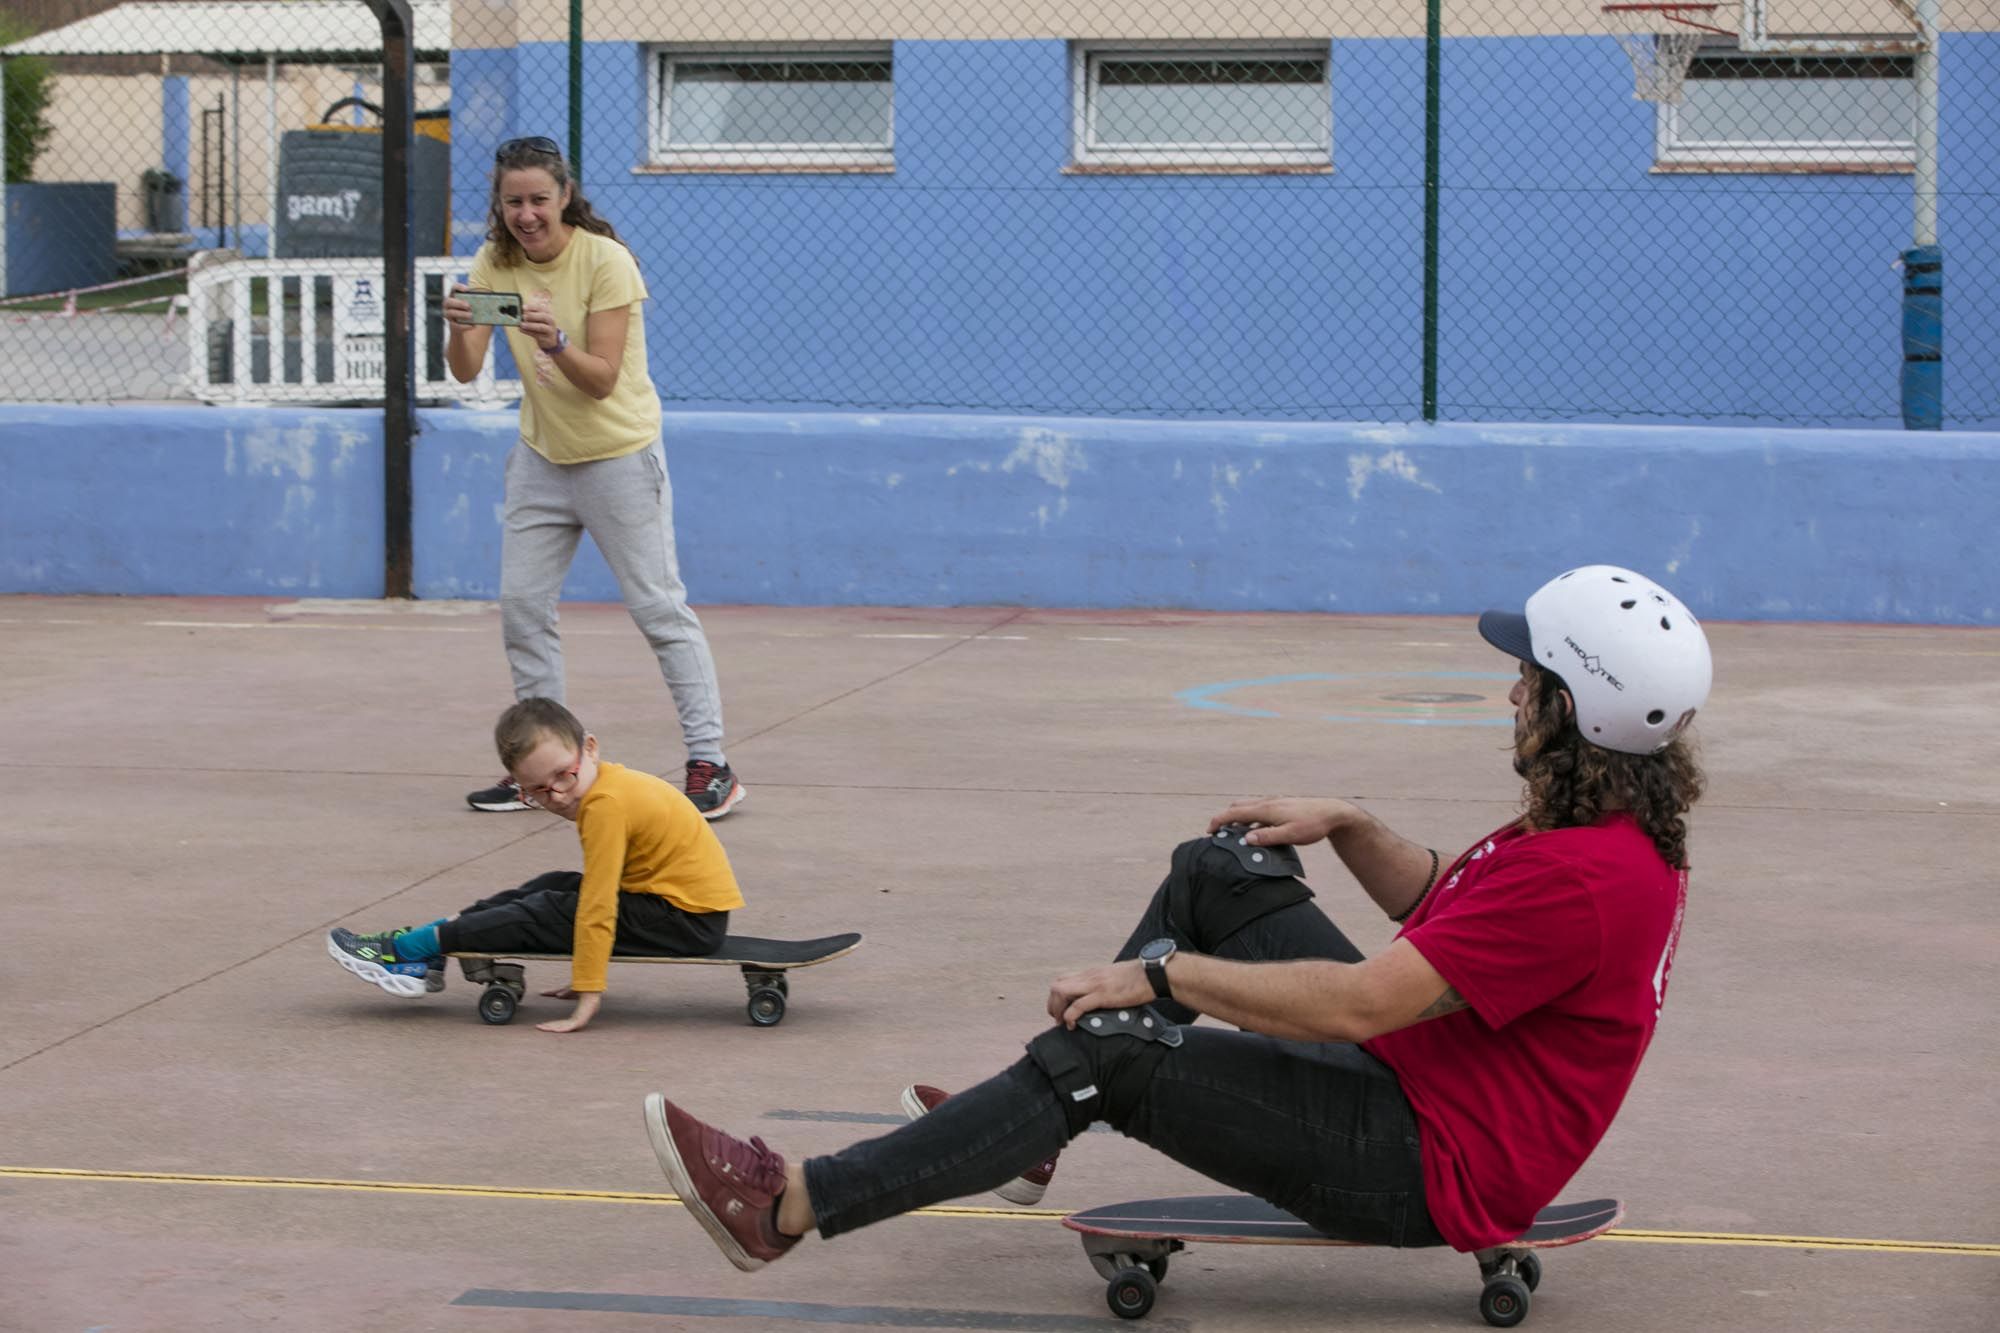 'Surfskate': deporte inclusivo en Ibiza